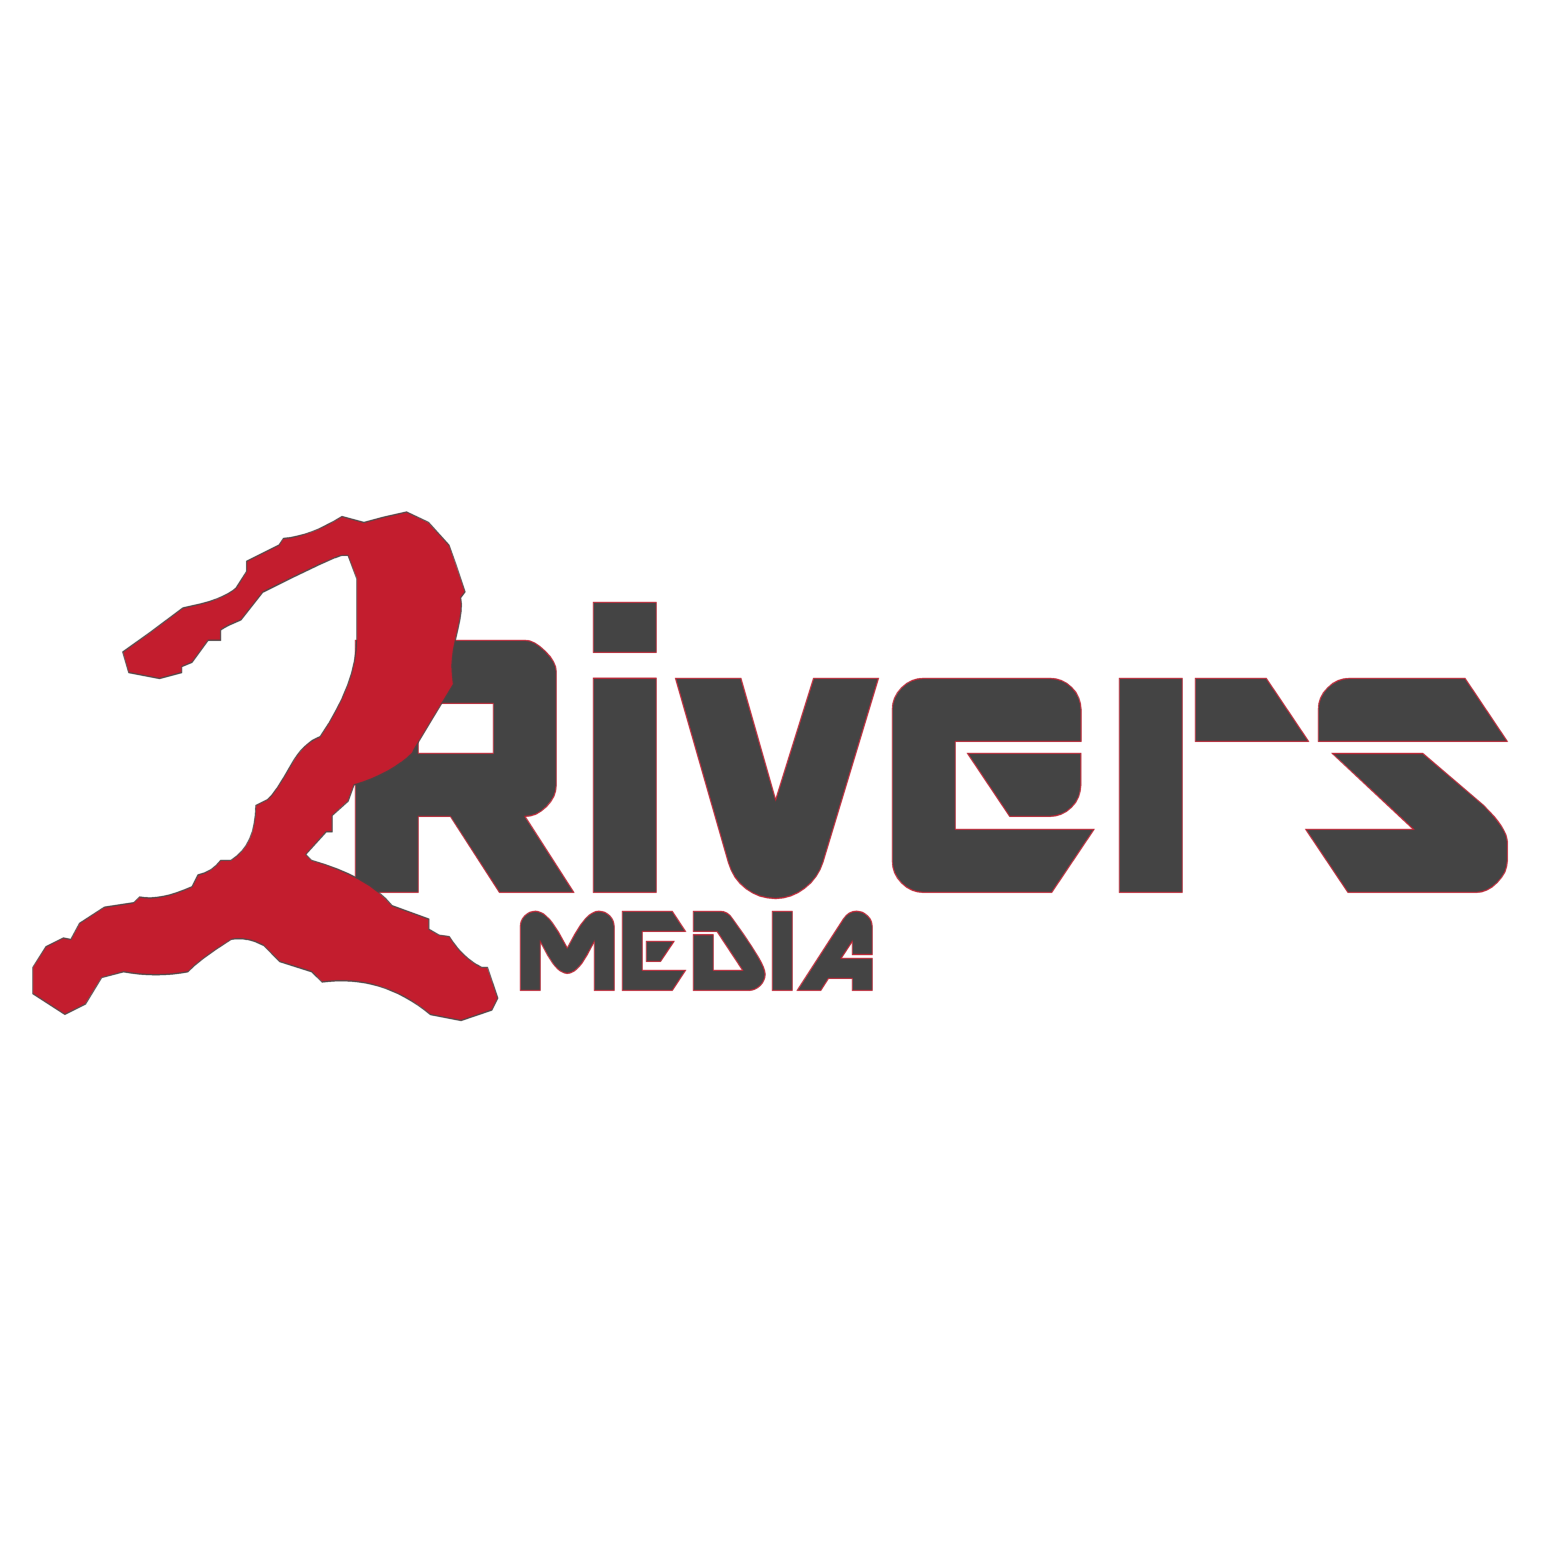 2Rivers Media